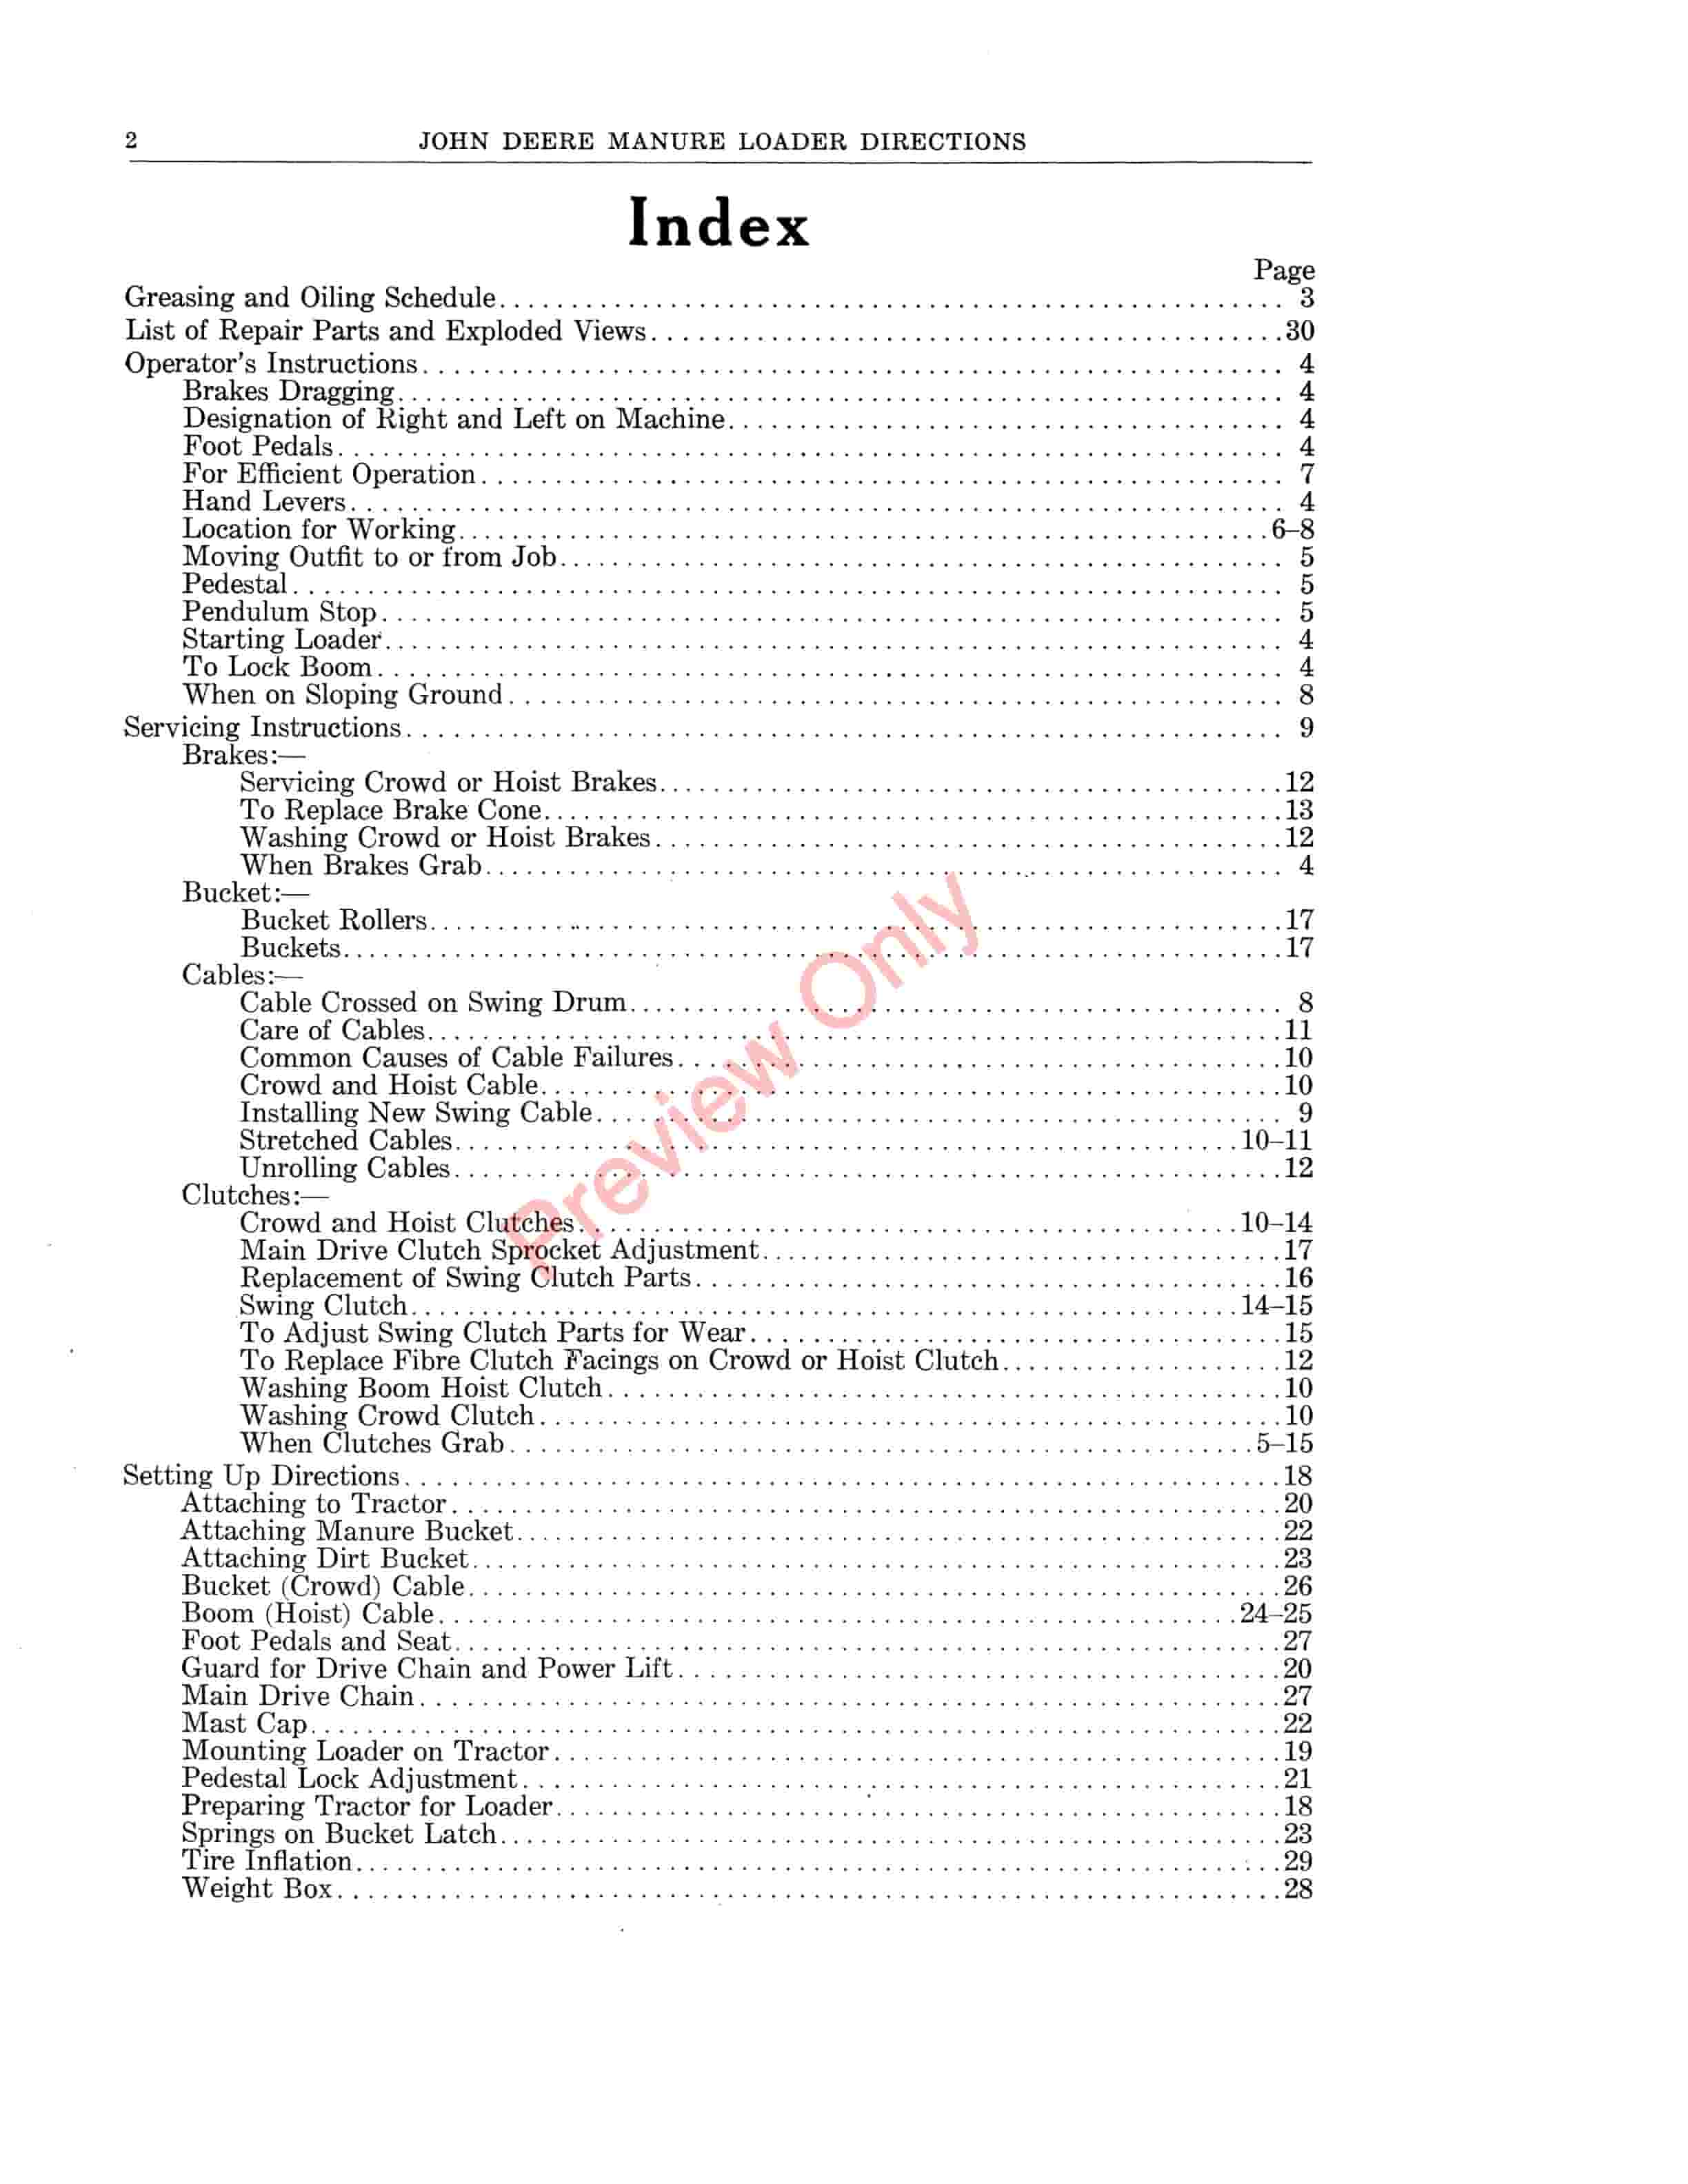 John Deere Manure Loader WRepair List No. 2 C Parts Catalog DIR93D 01MAY44 4